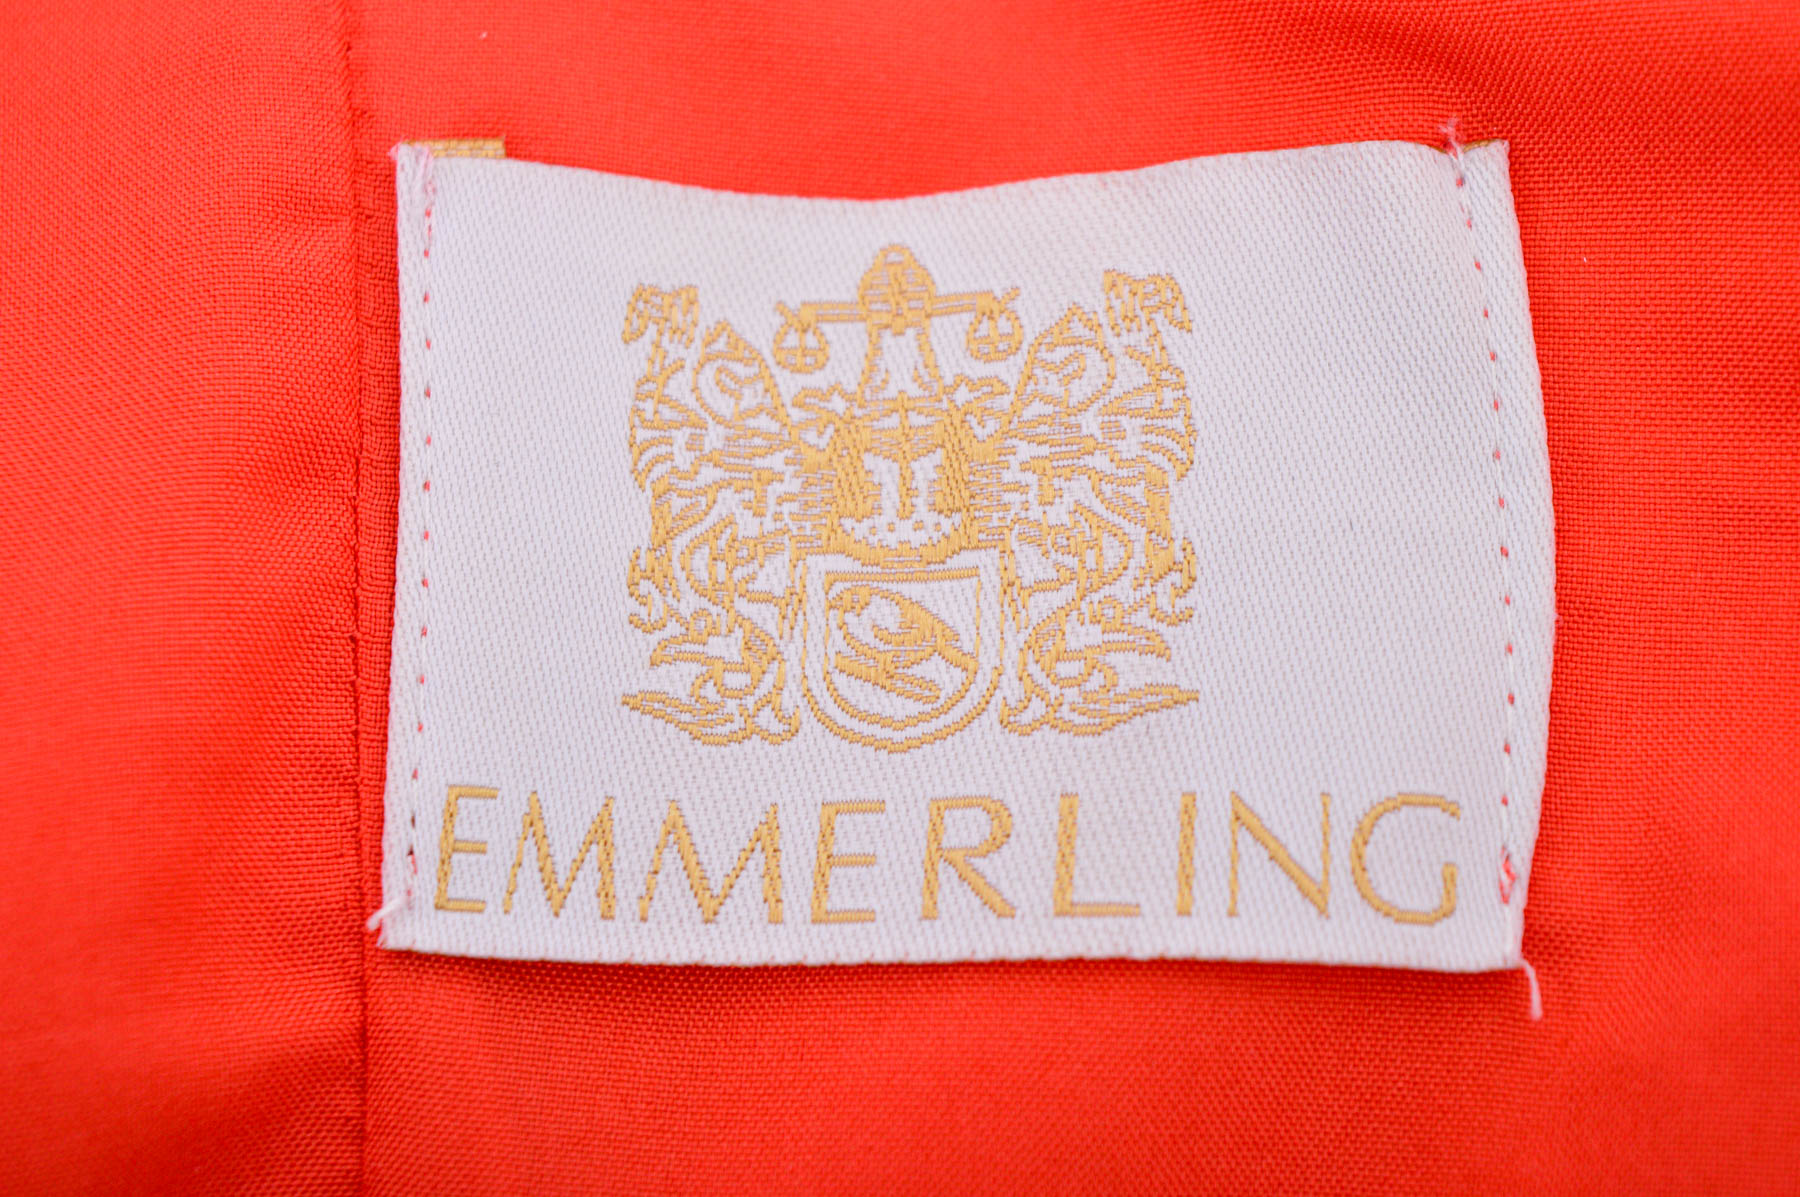 Women's shirt - EMMERLING - 2